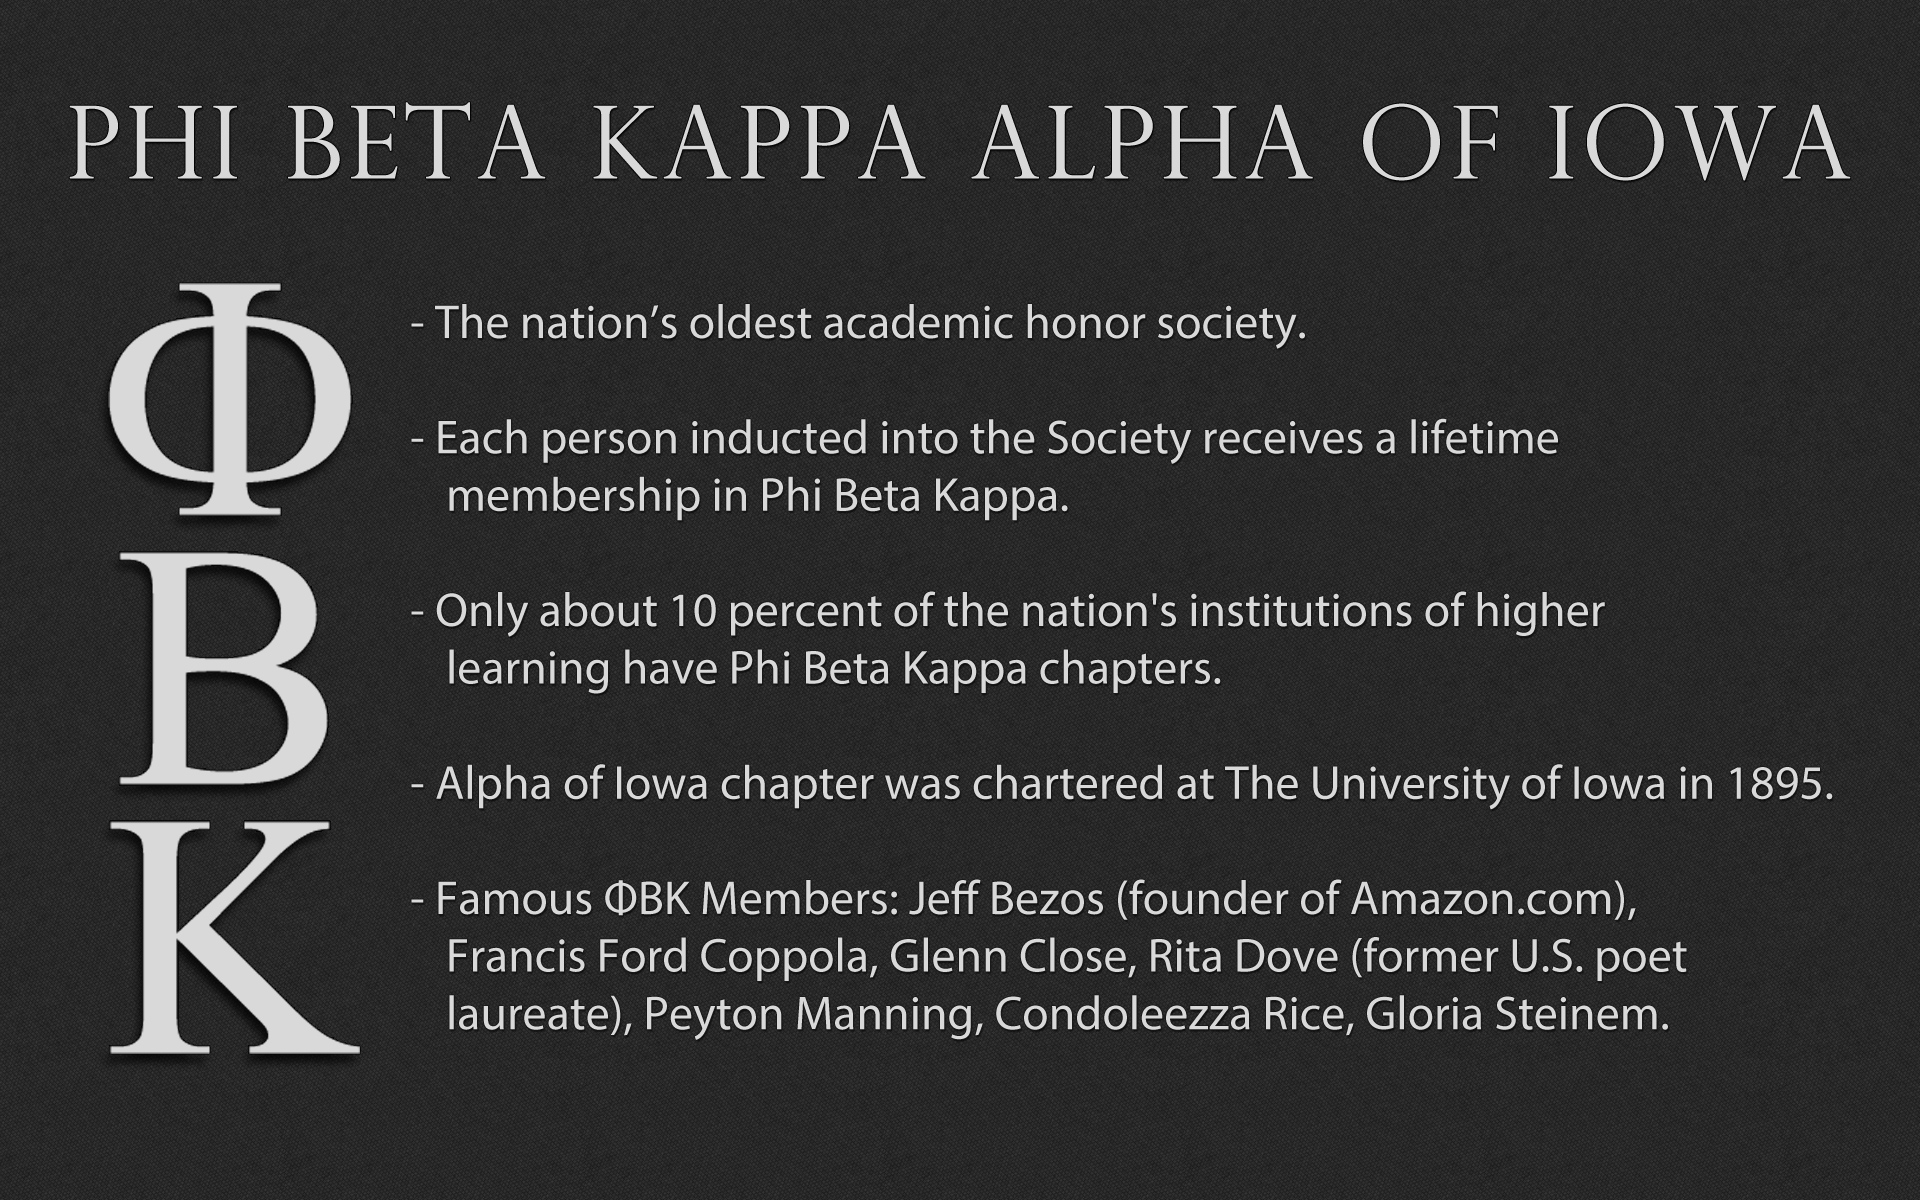 Phi Beta Kappa Alpha of Iowa